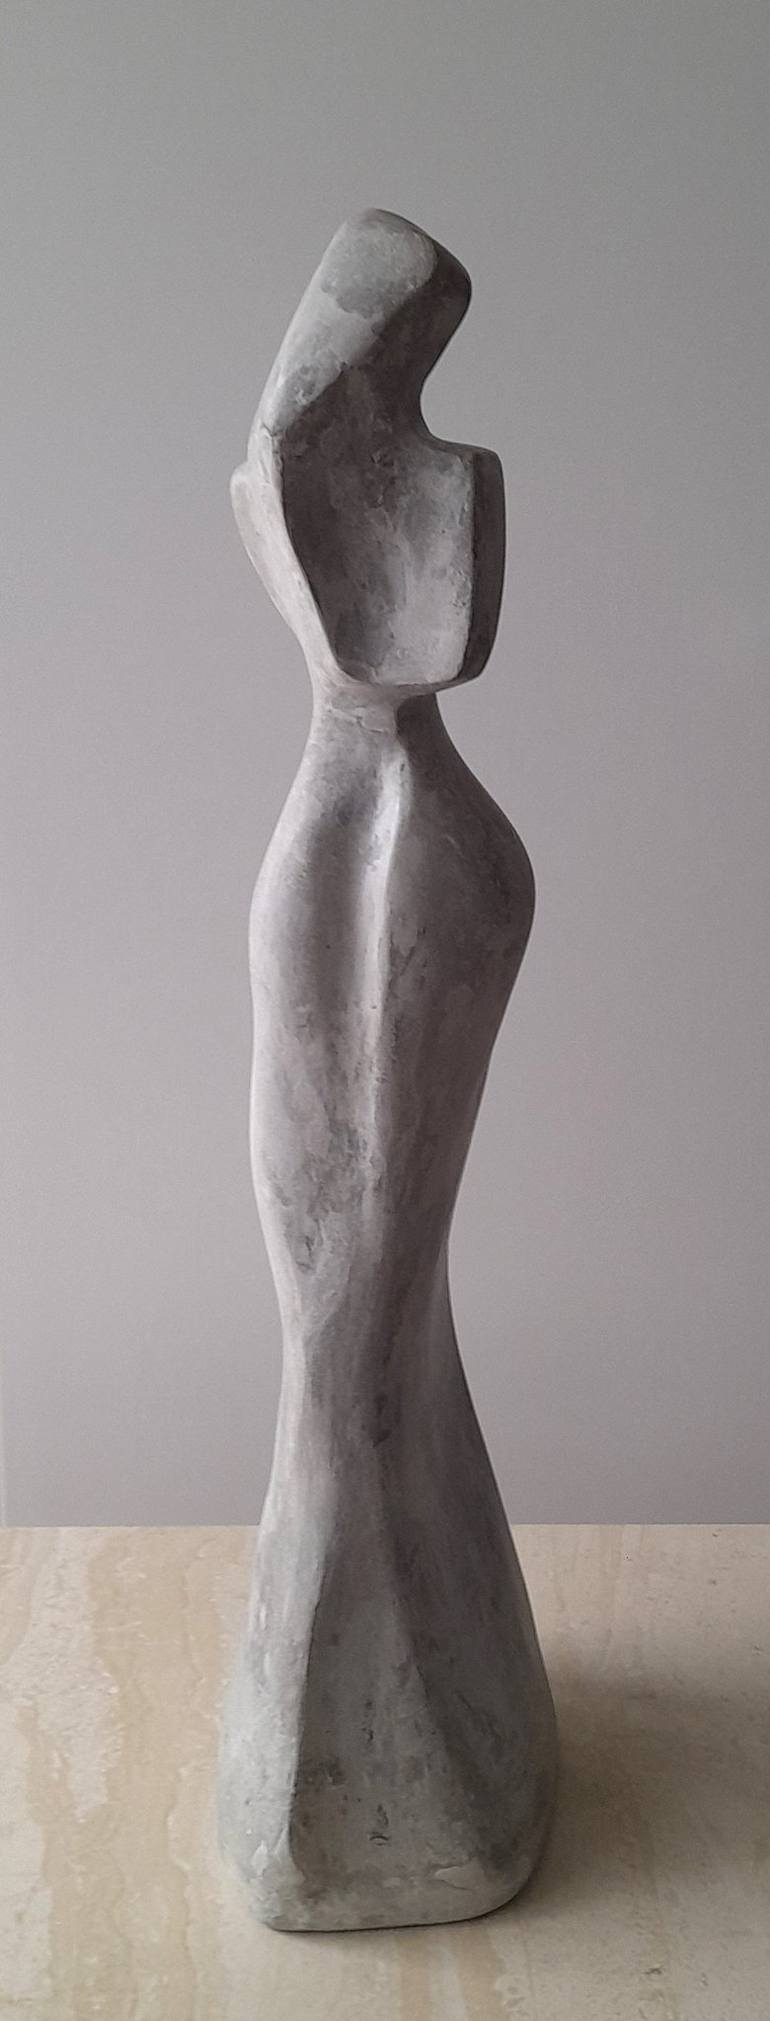 Original Body Sculpture by Clark Camilleri